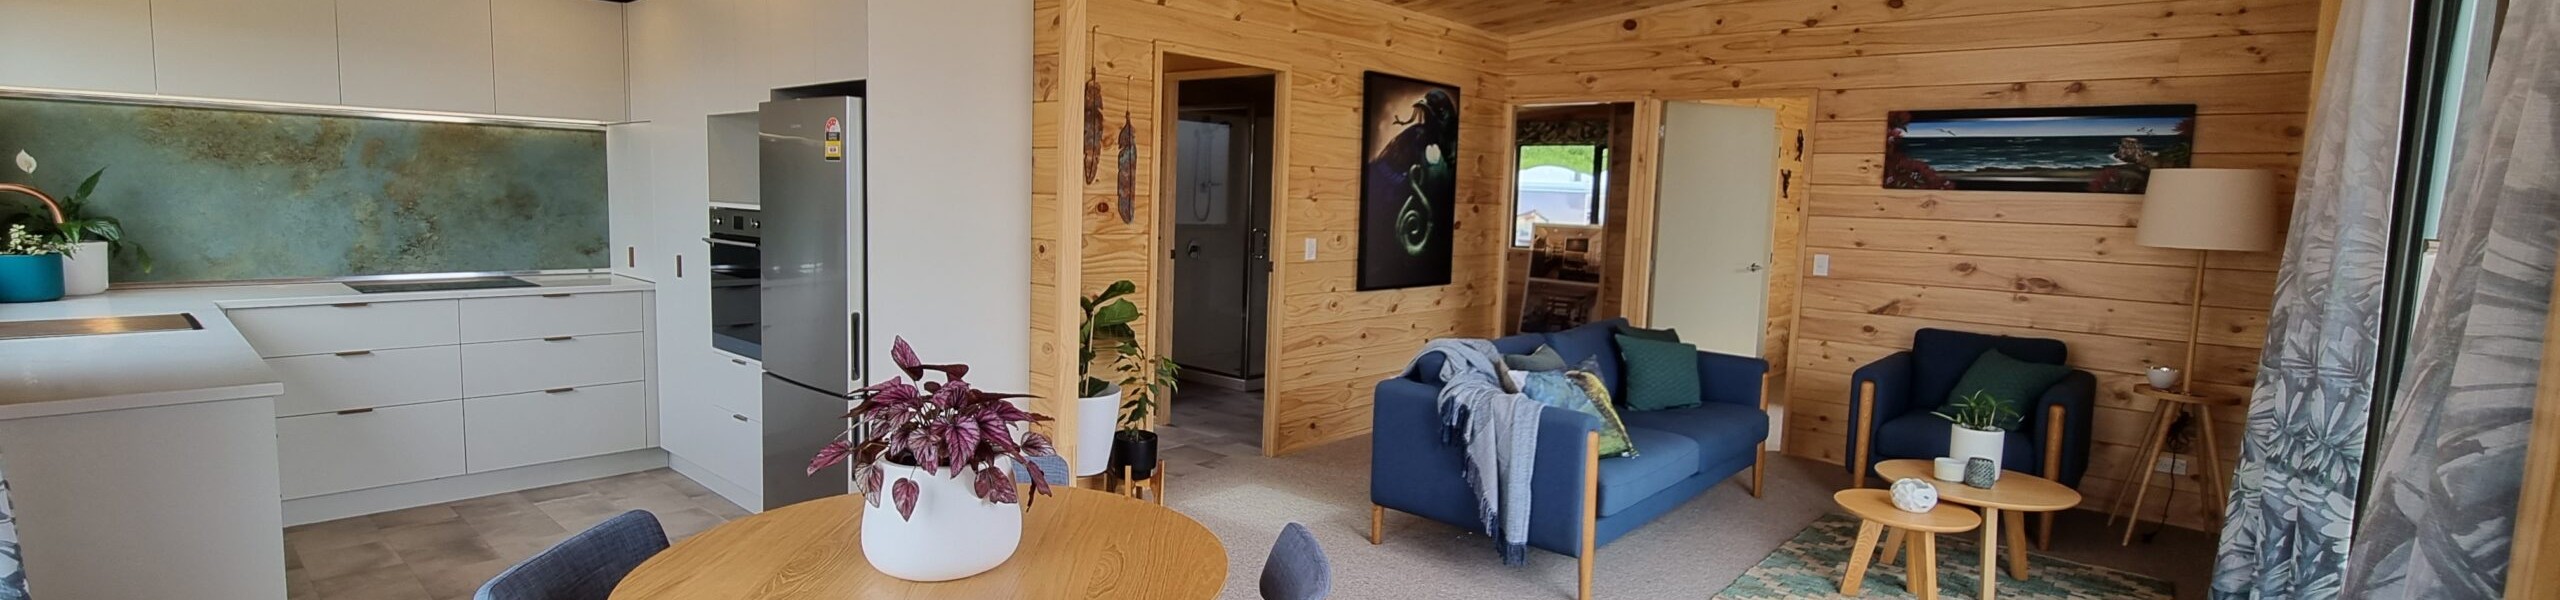 Lakeview Show Home Rotorua image 0